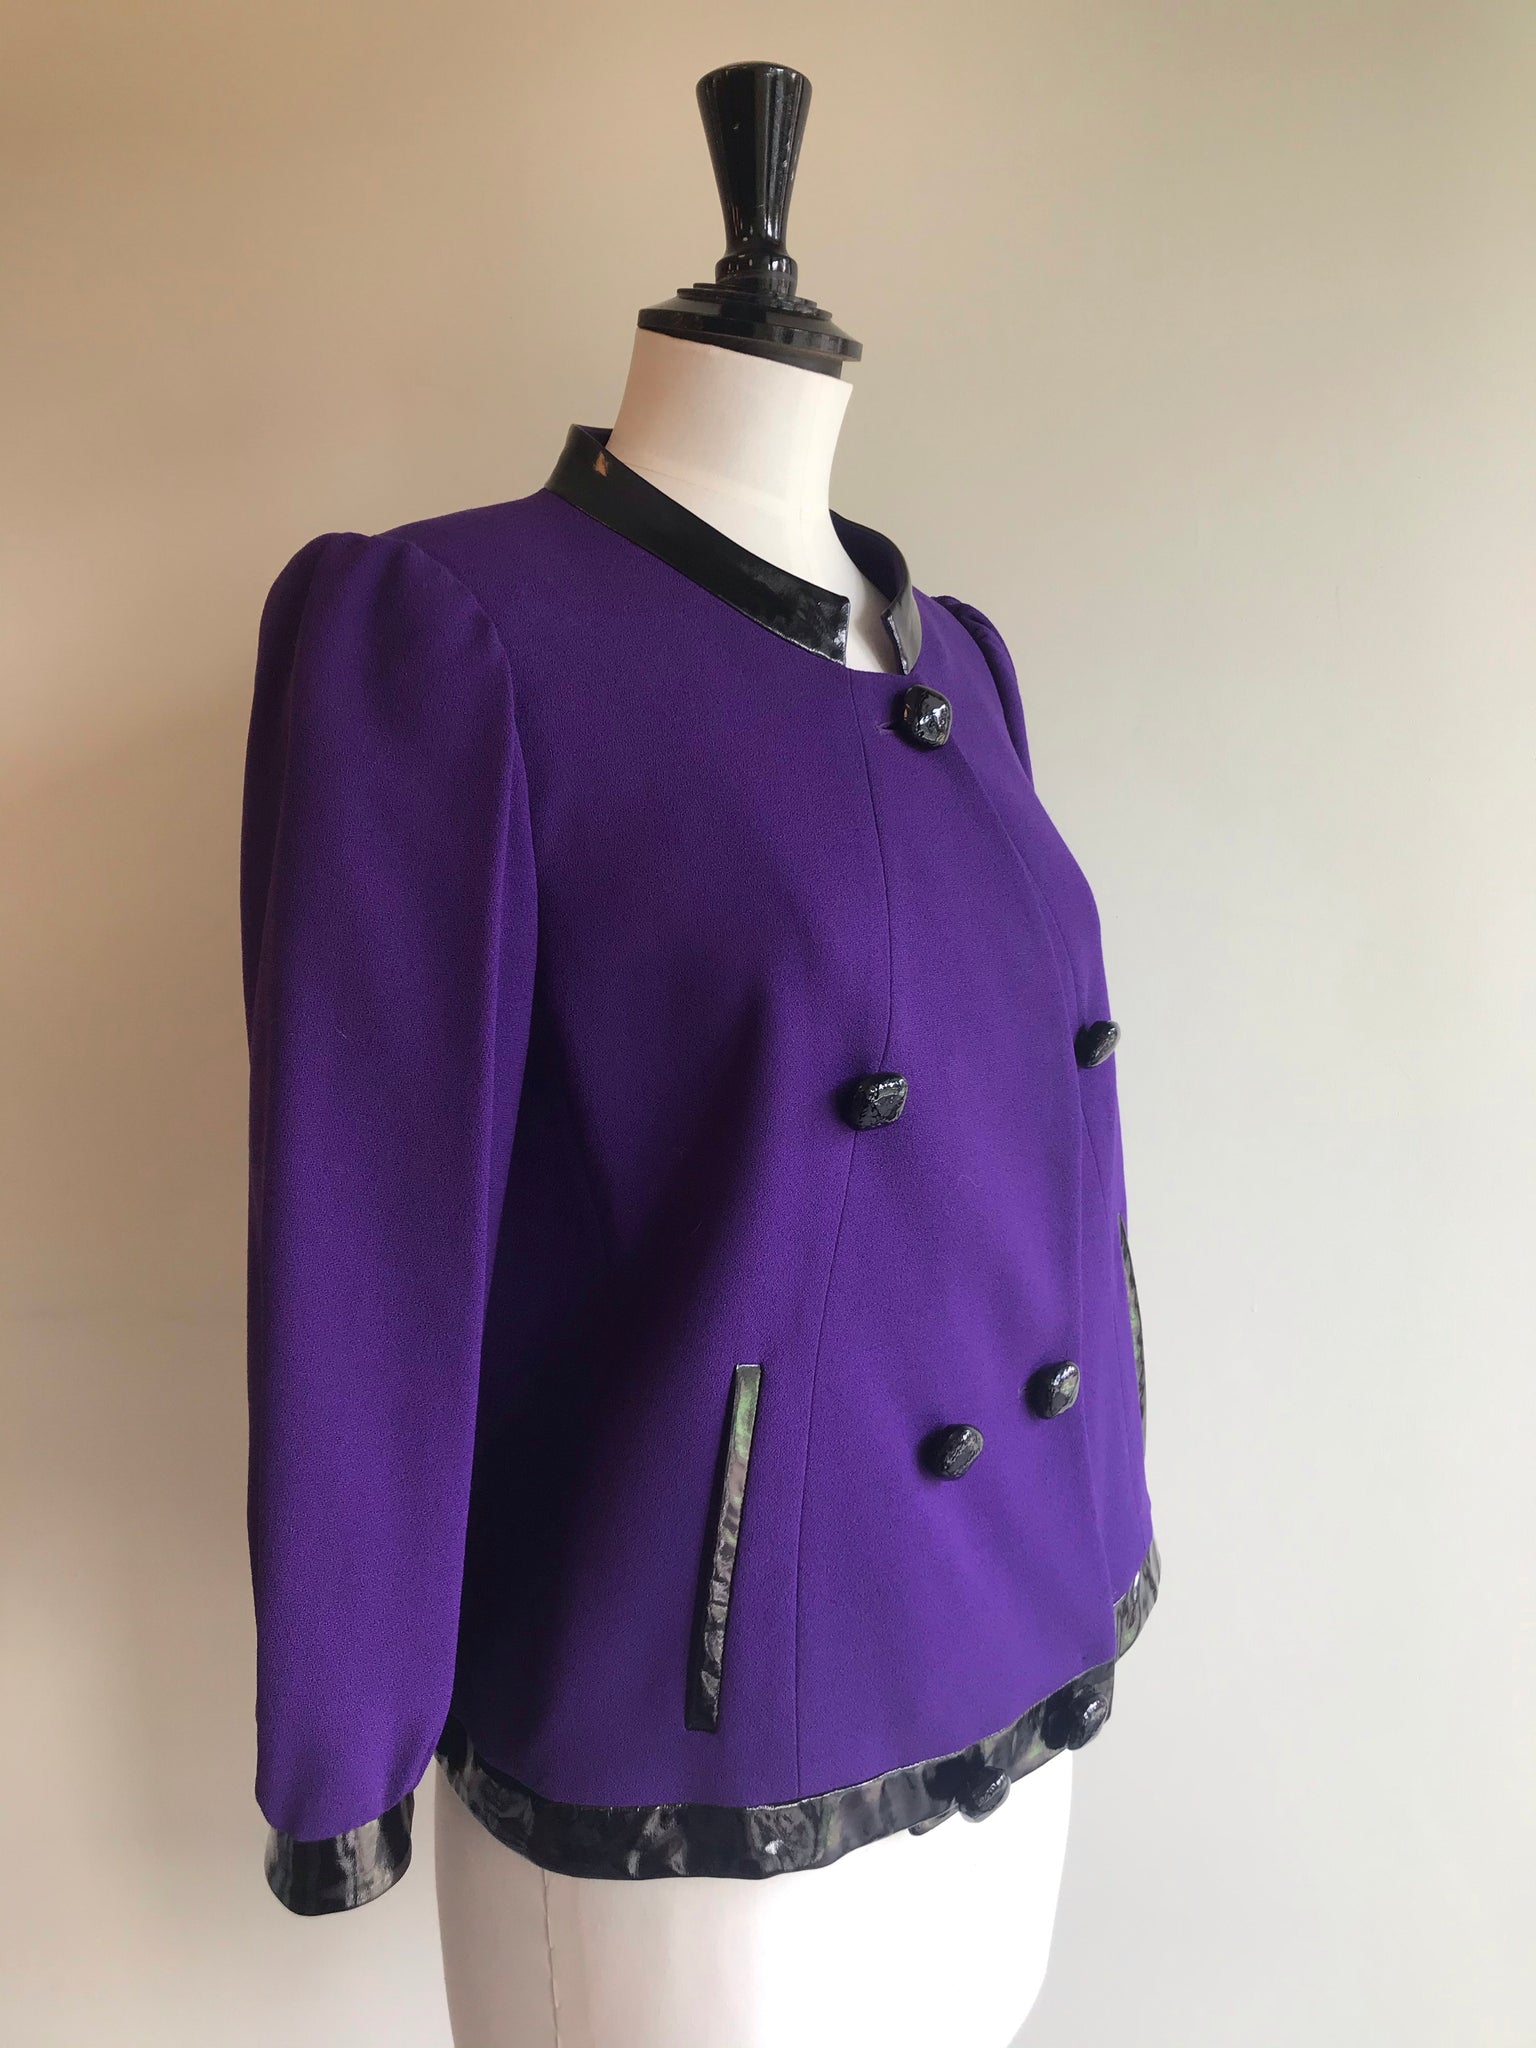 Isabella's Wardrobe Armani Collezioni Wool Jacket with Patent Trim.